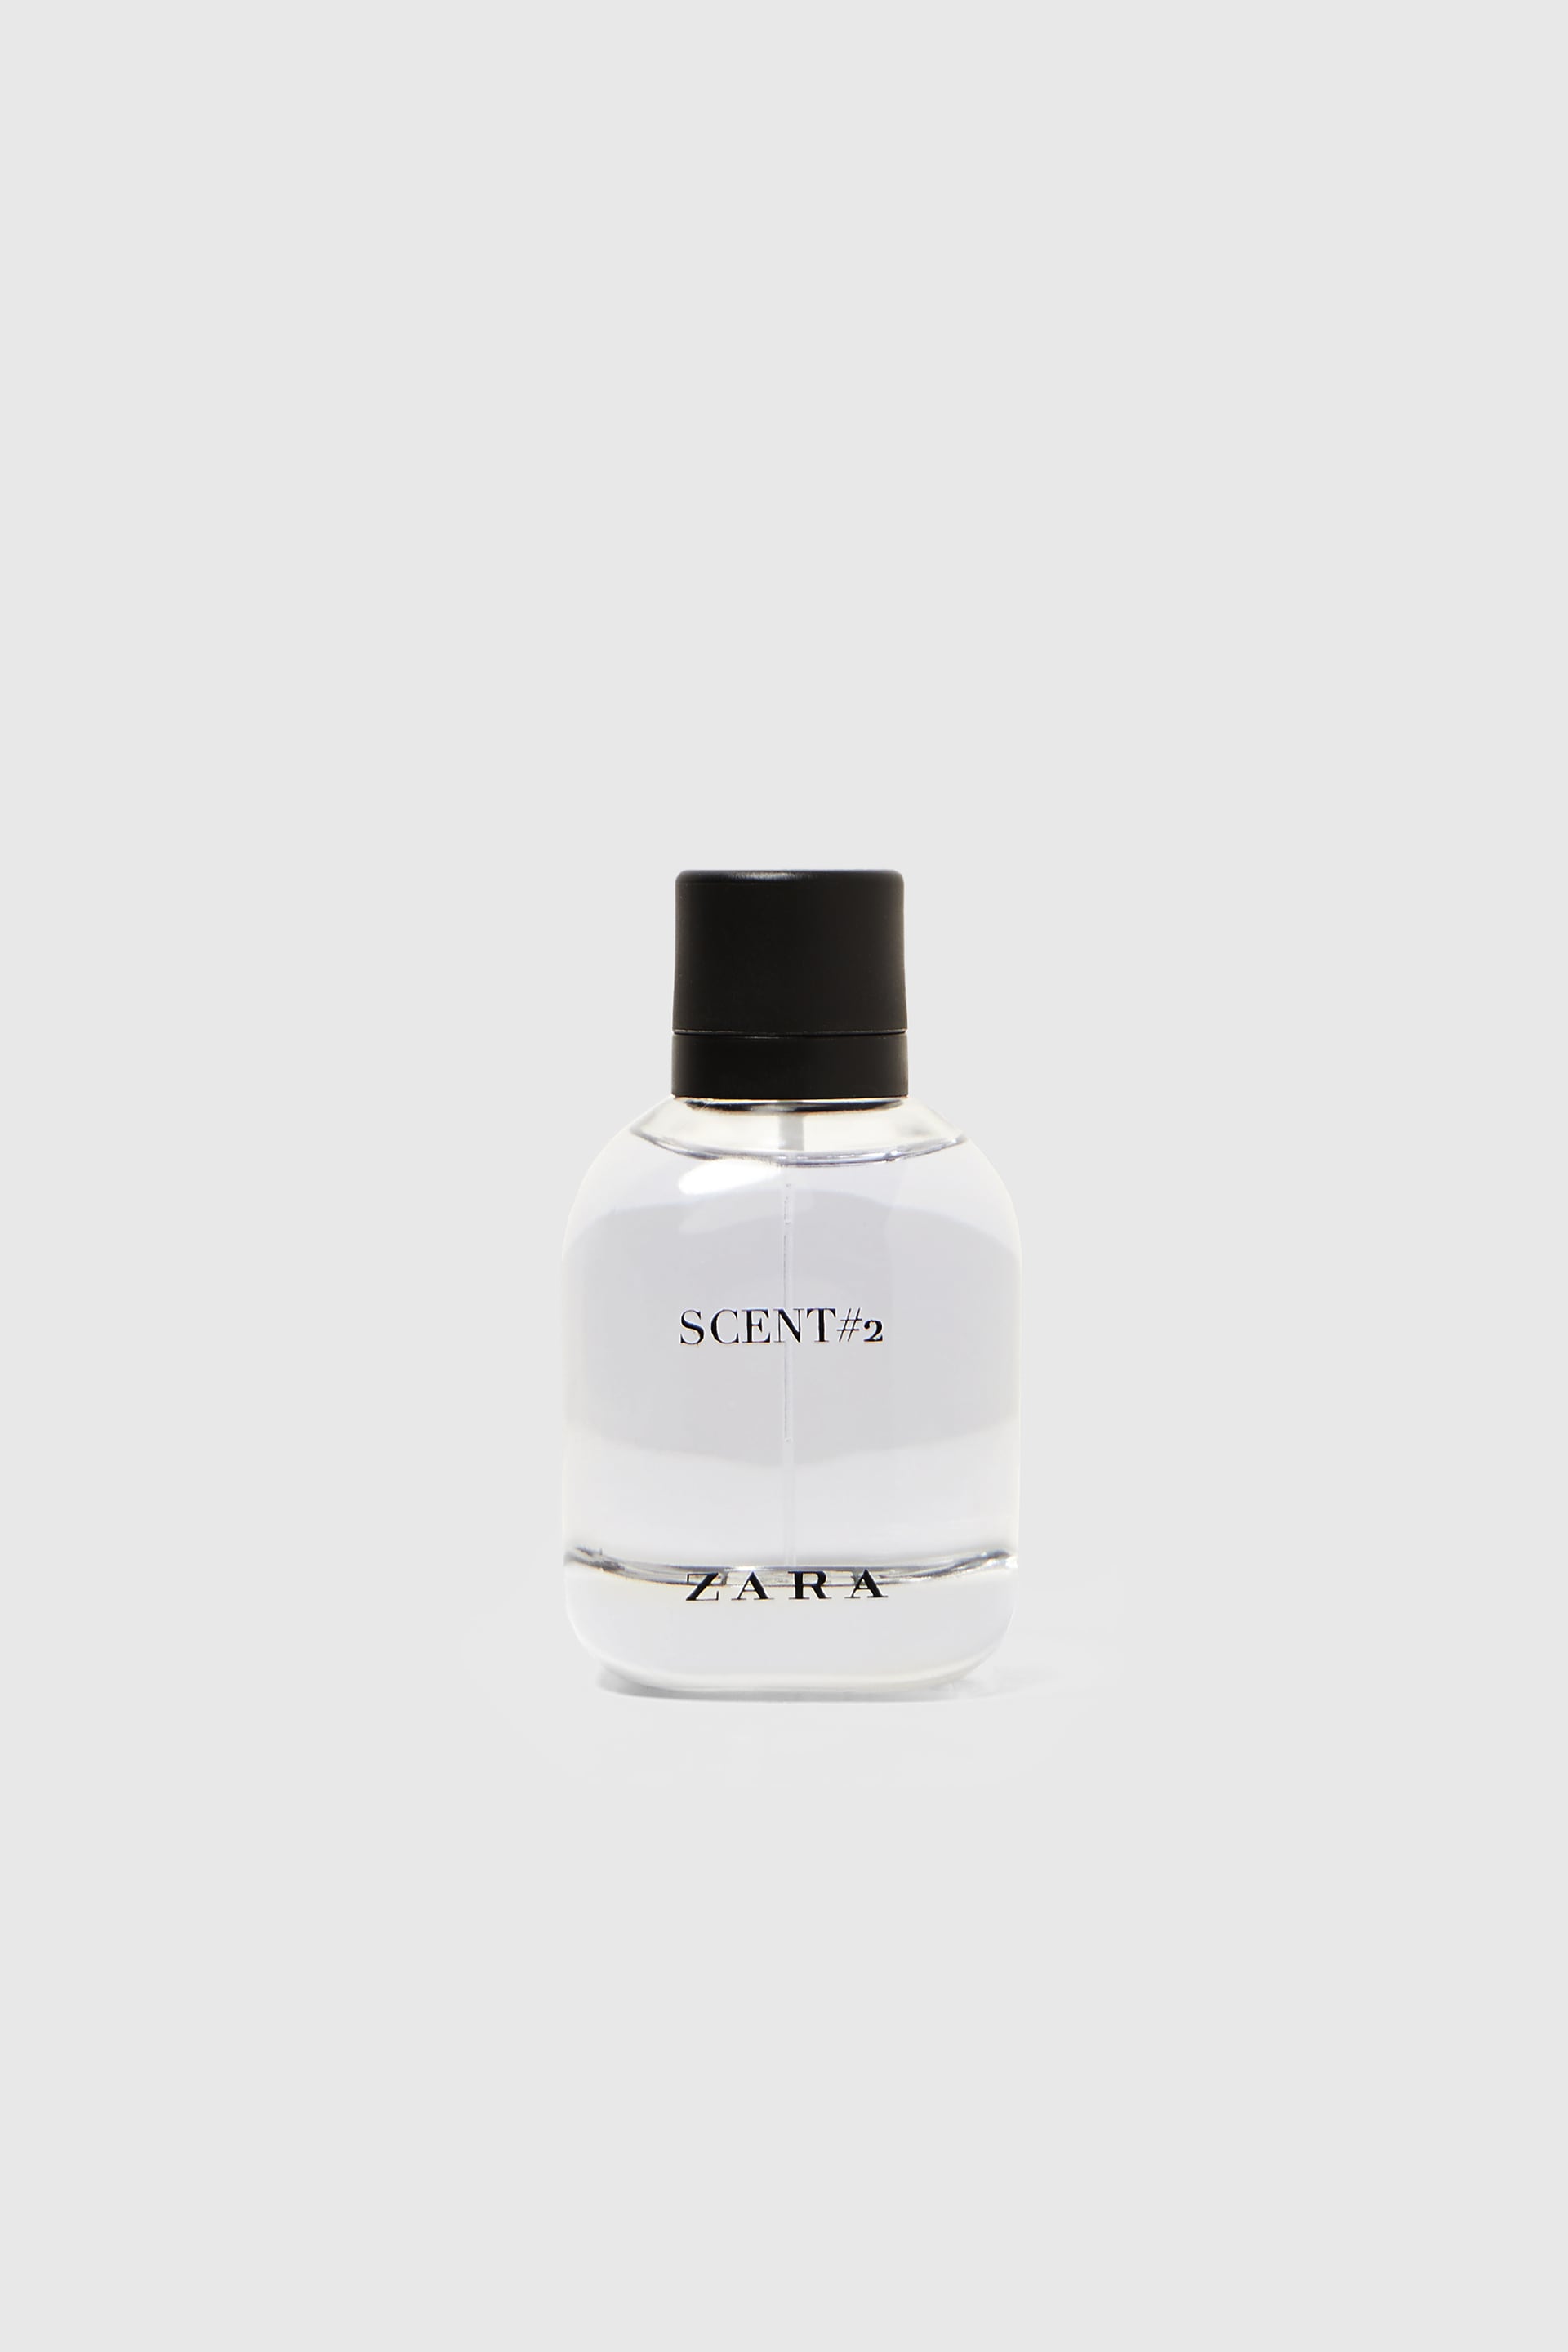 Scent #2 Zara cologne - a new fragrance 